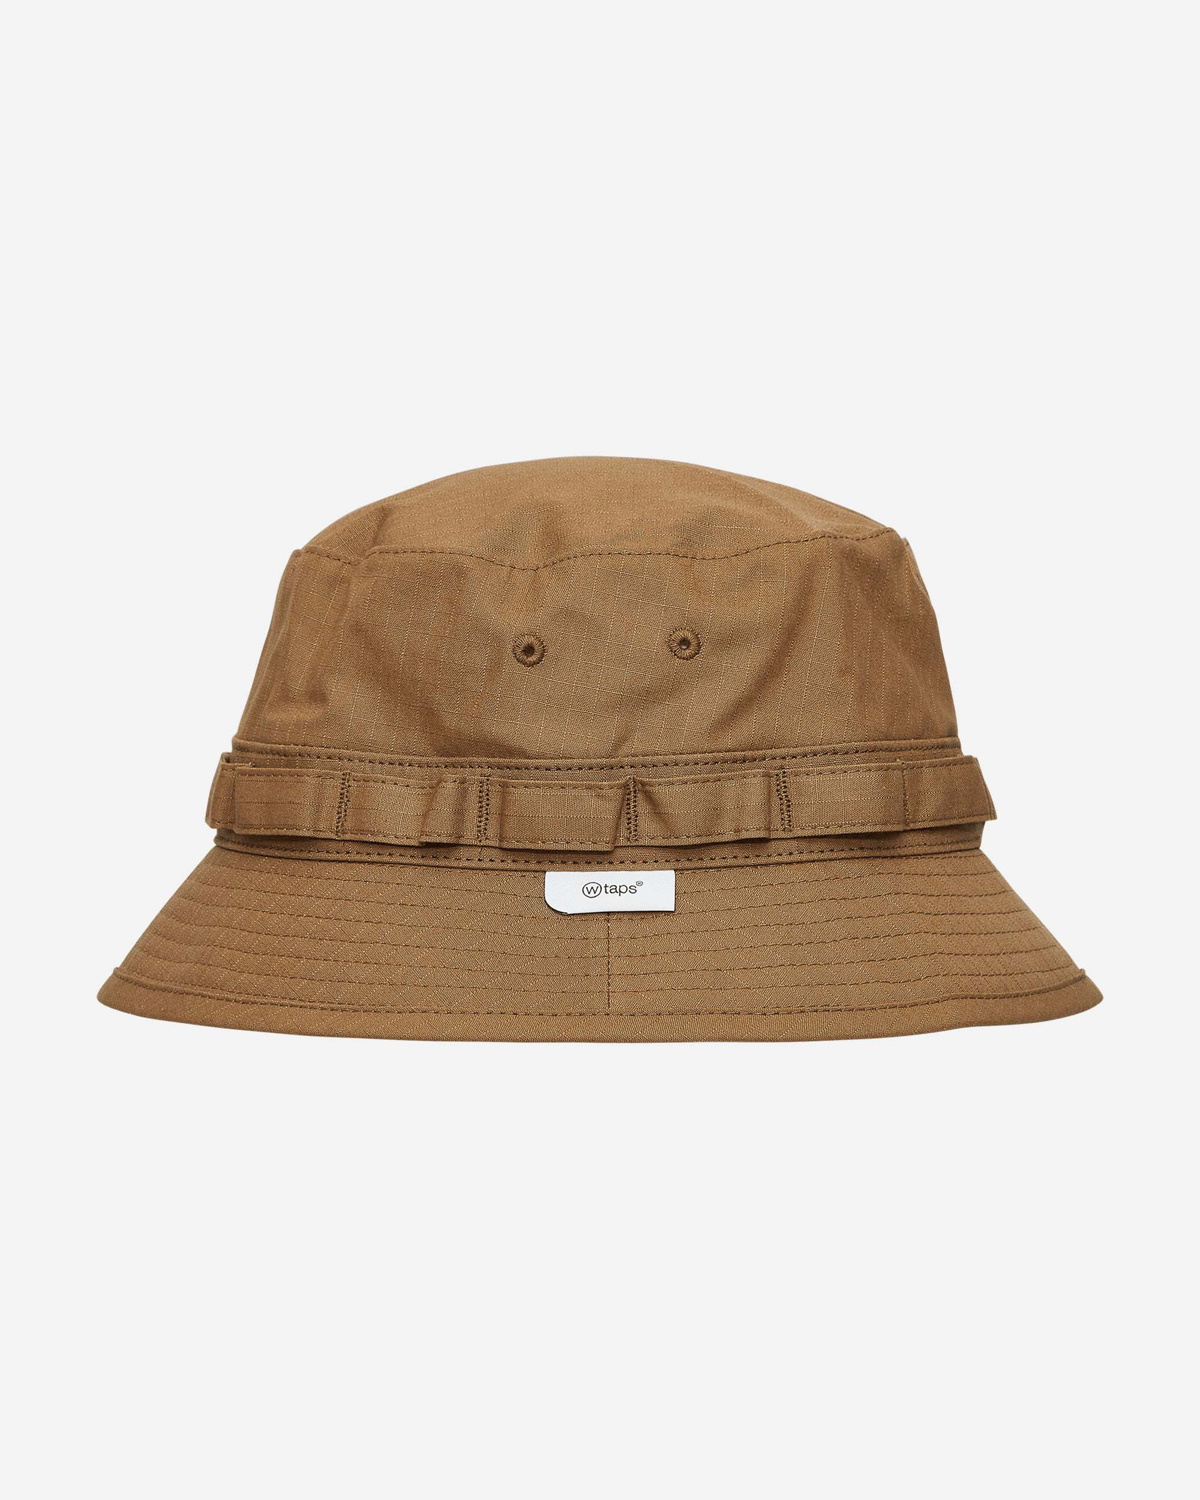 Jungle 02 Ripstop Hat